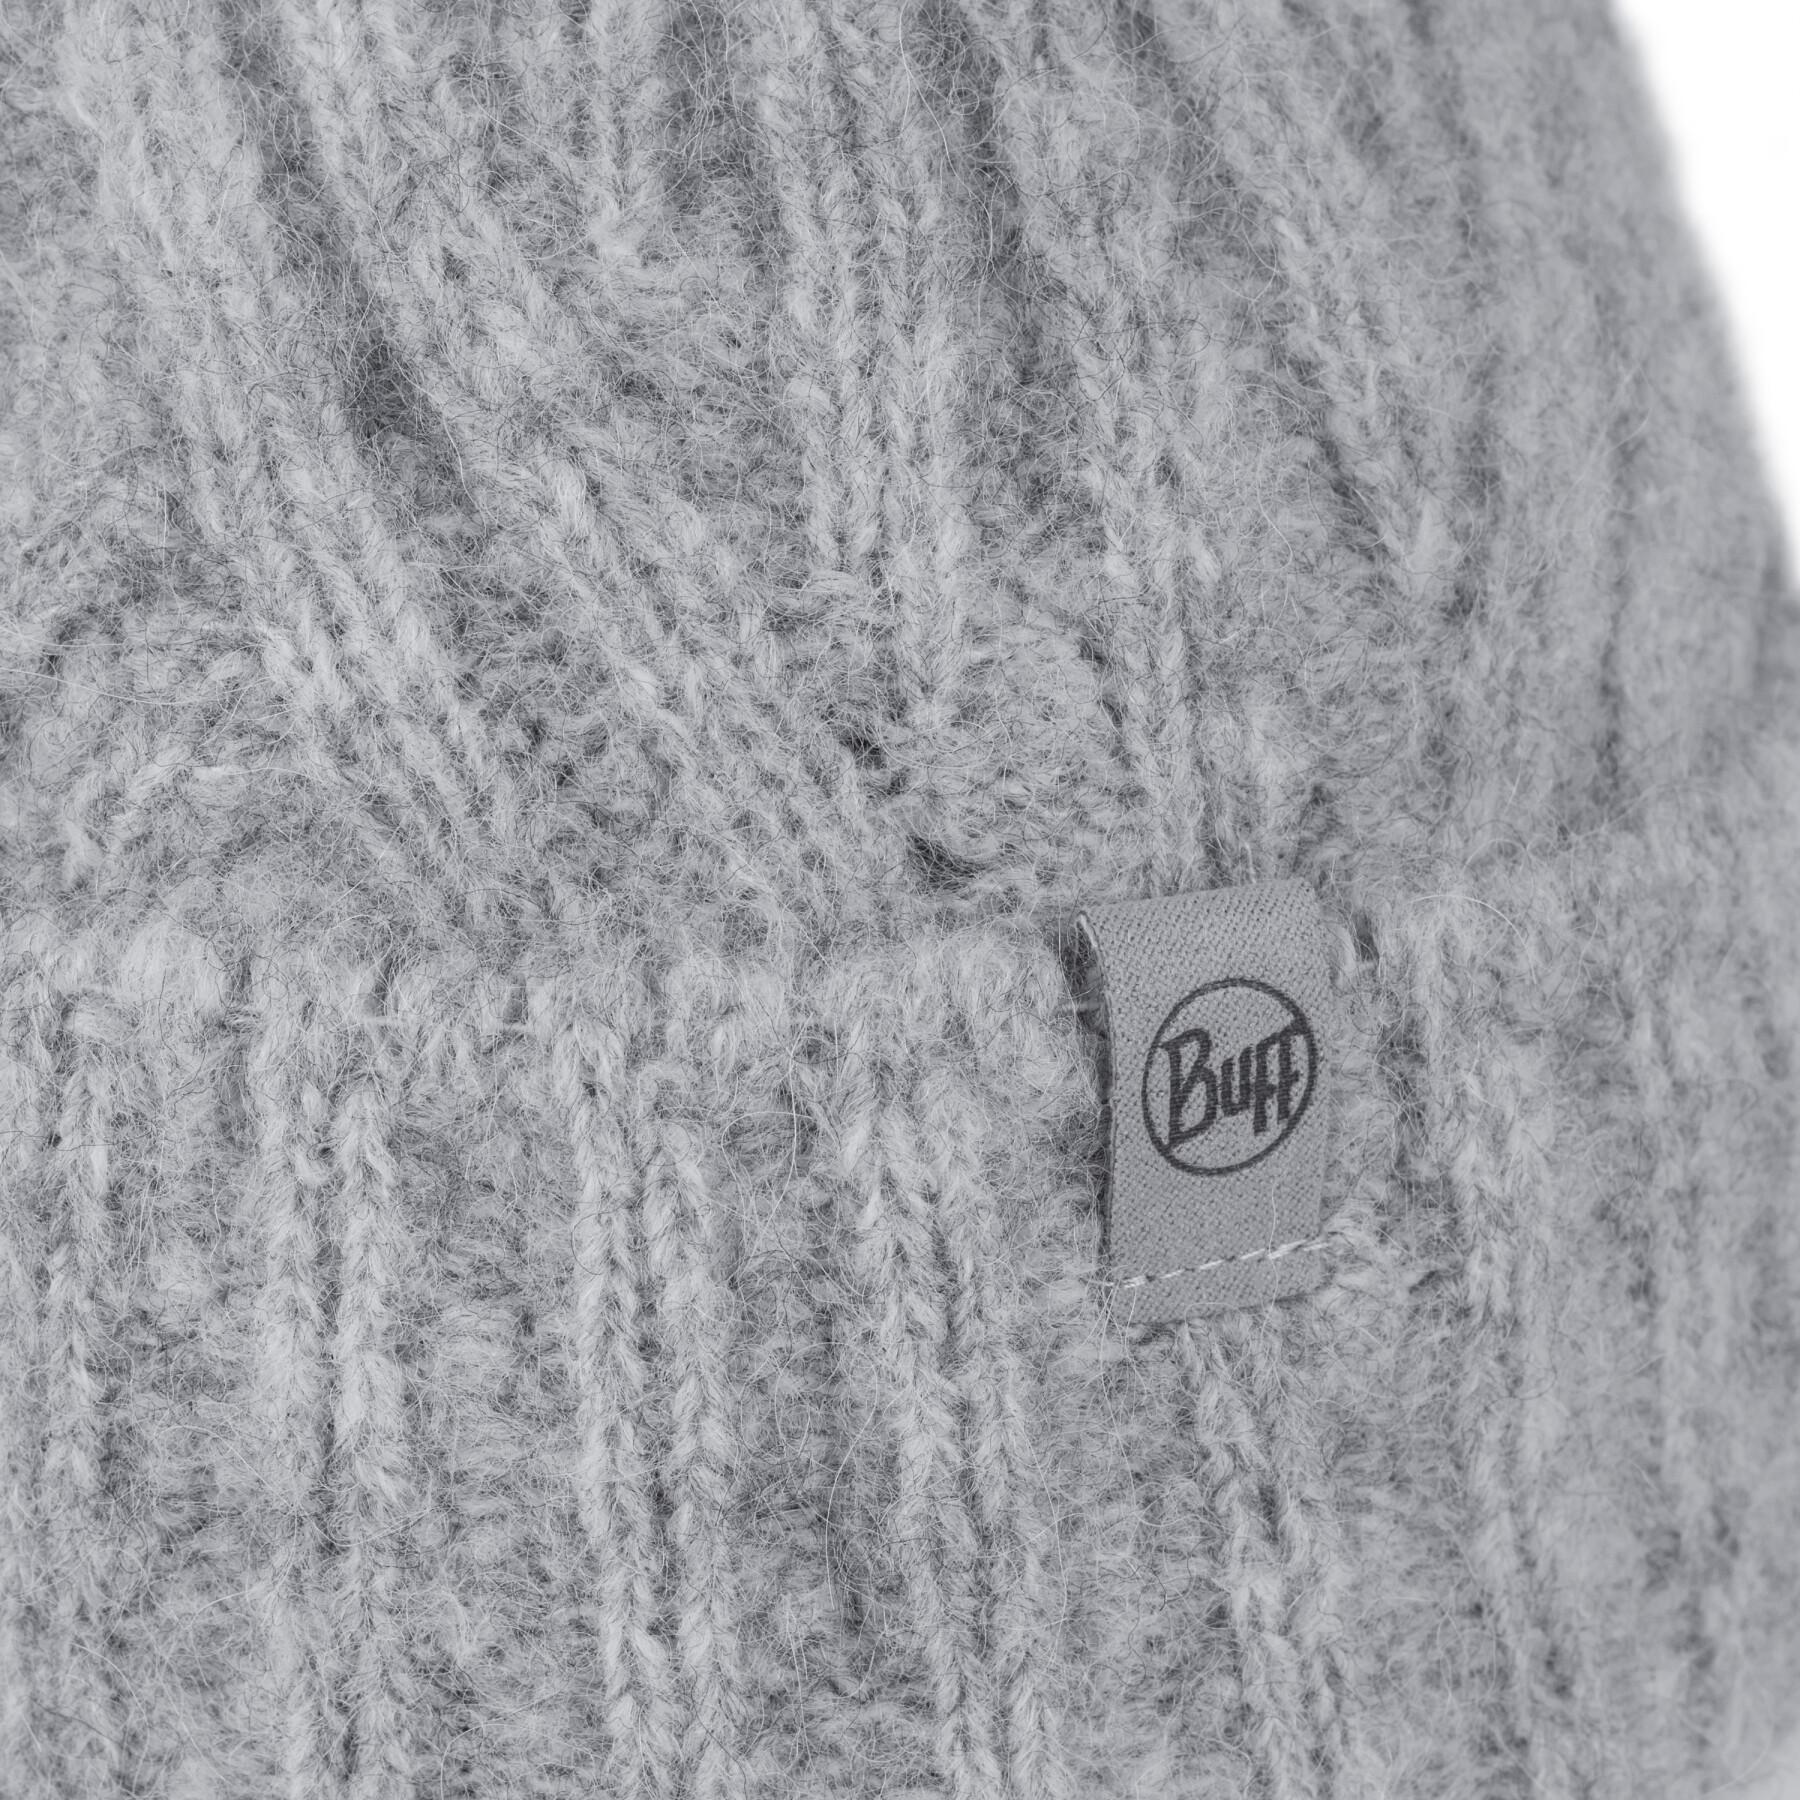 Women's knitted hat Buff Nerla